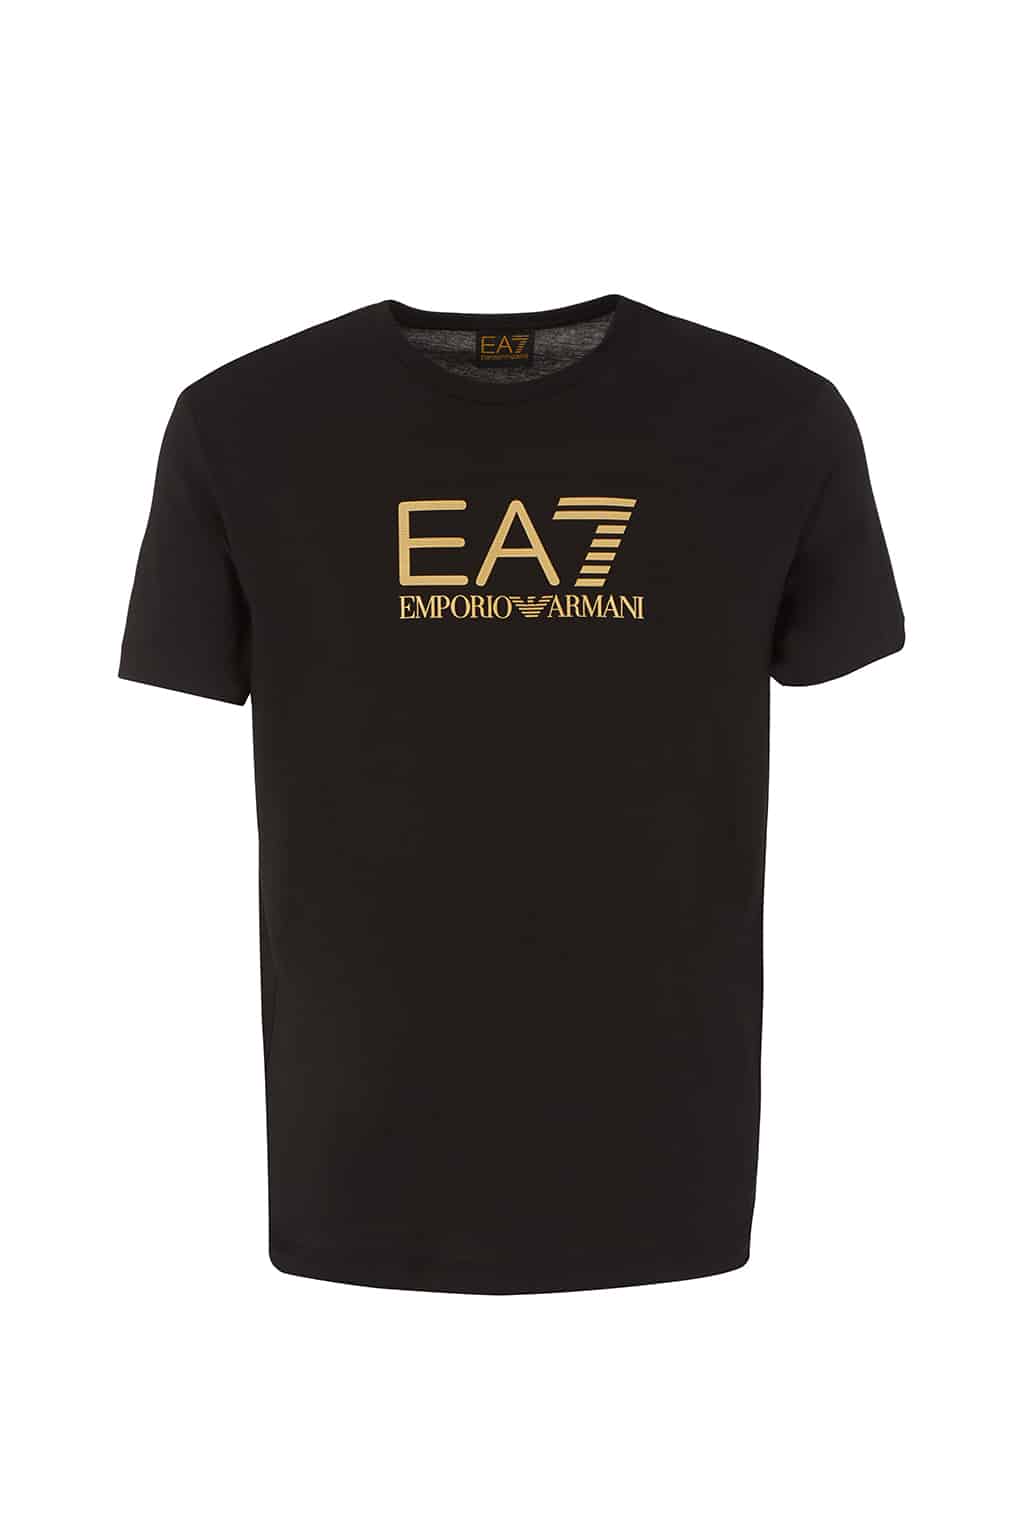 Armani EA7 T-Shirt Black